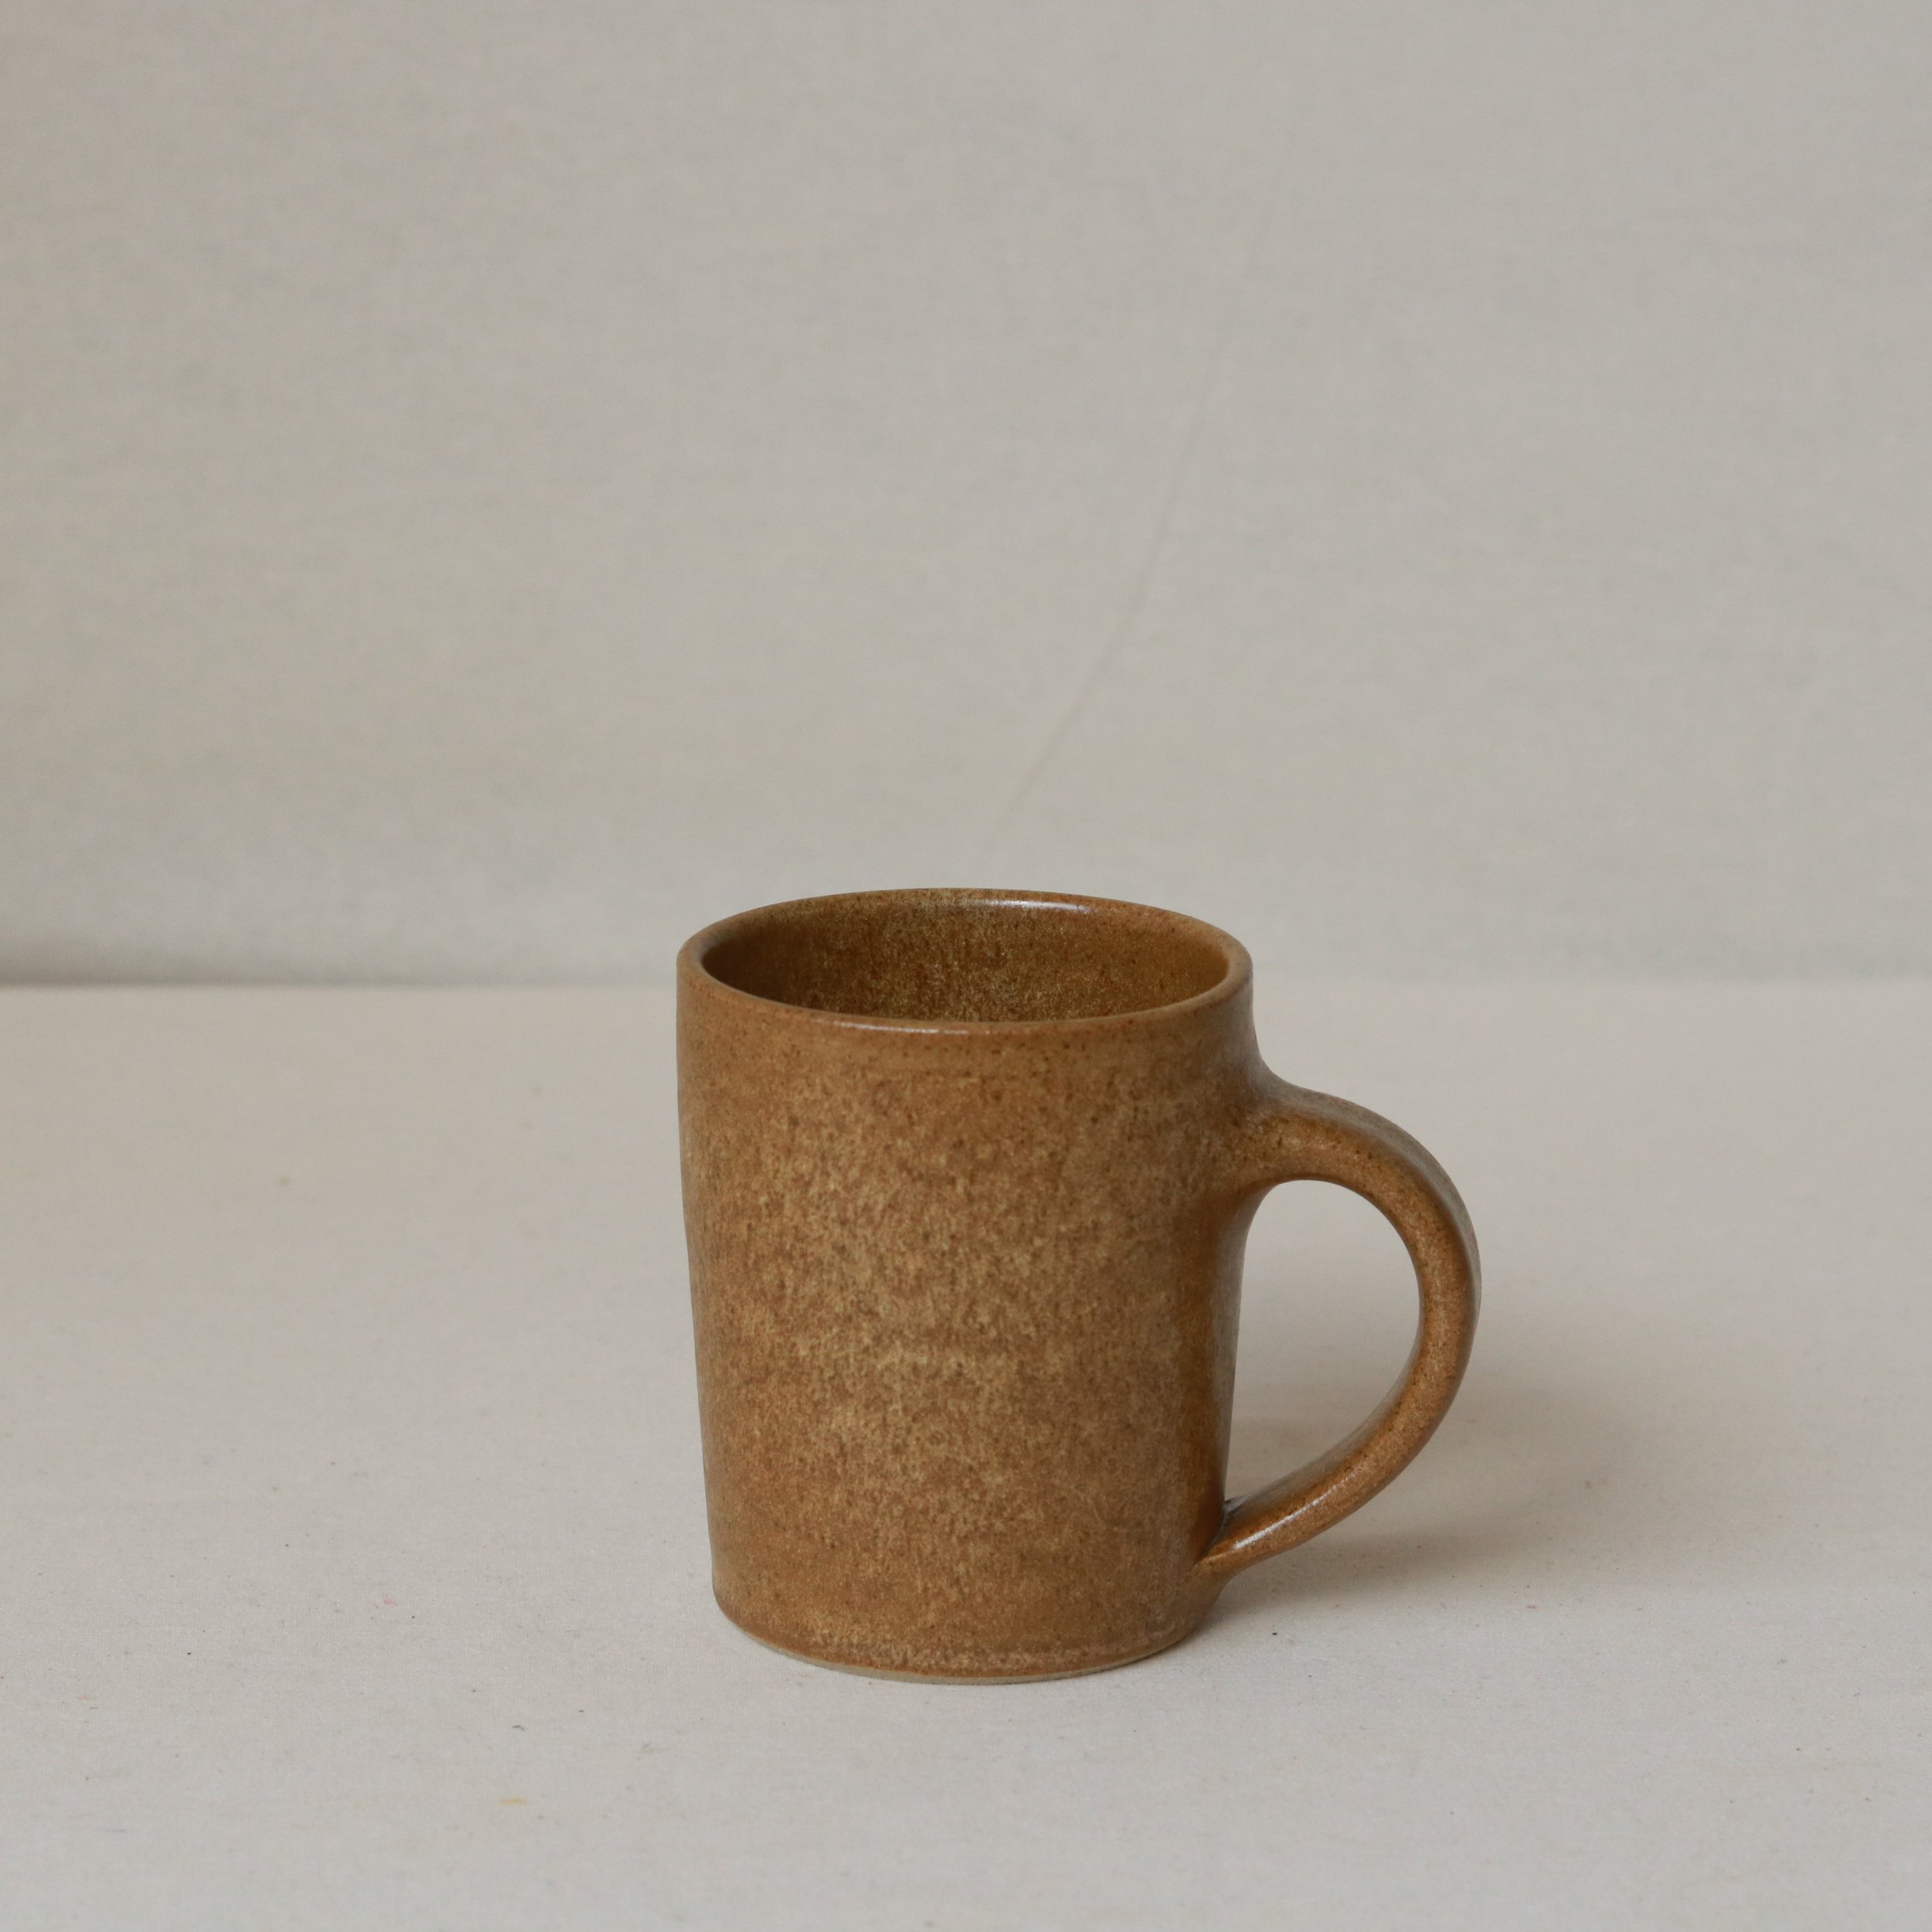 250ml Tapered Mug in Ochre, Flecked Stoneware-3.jpg